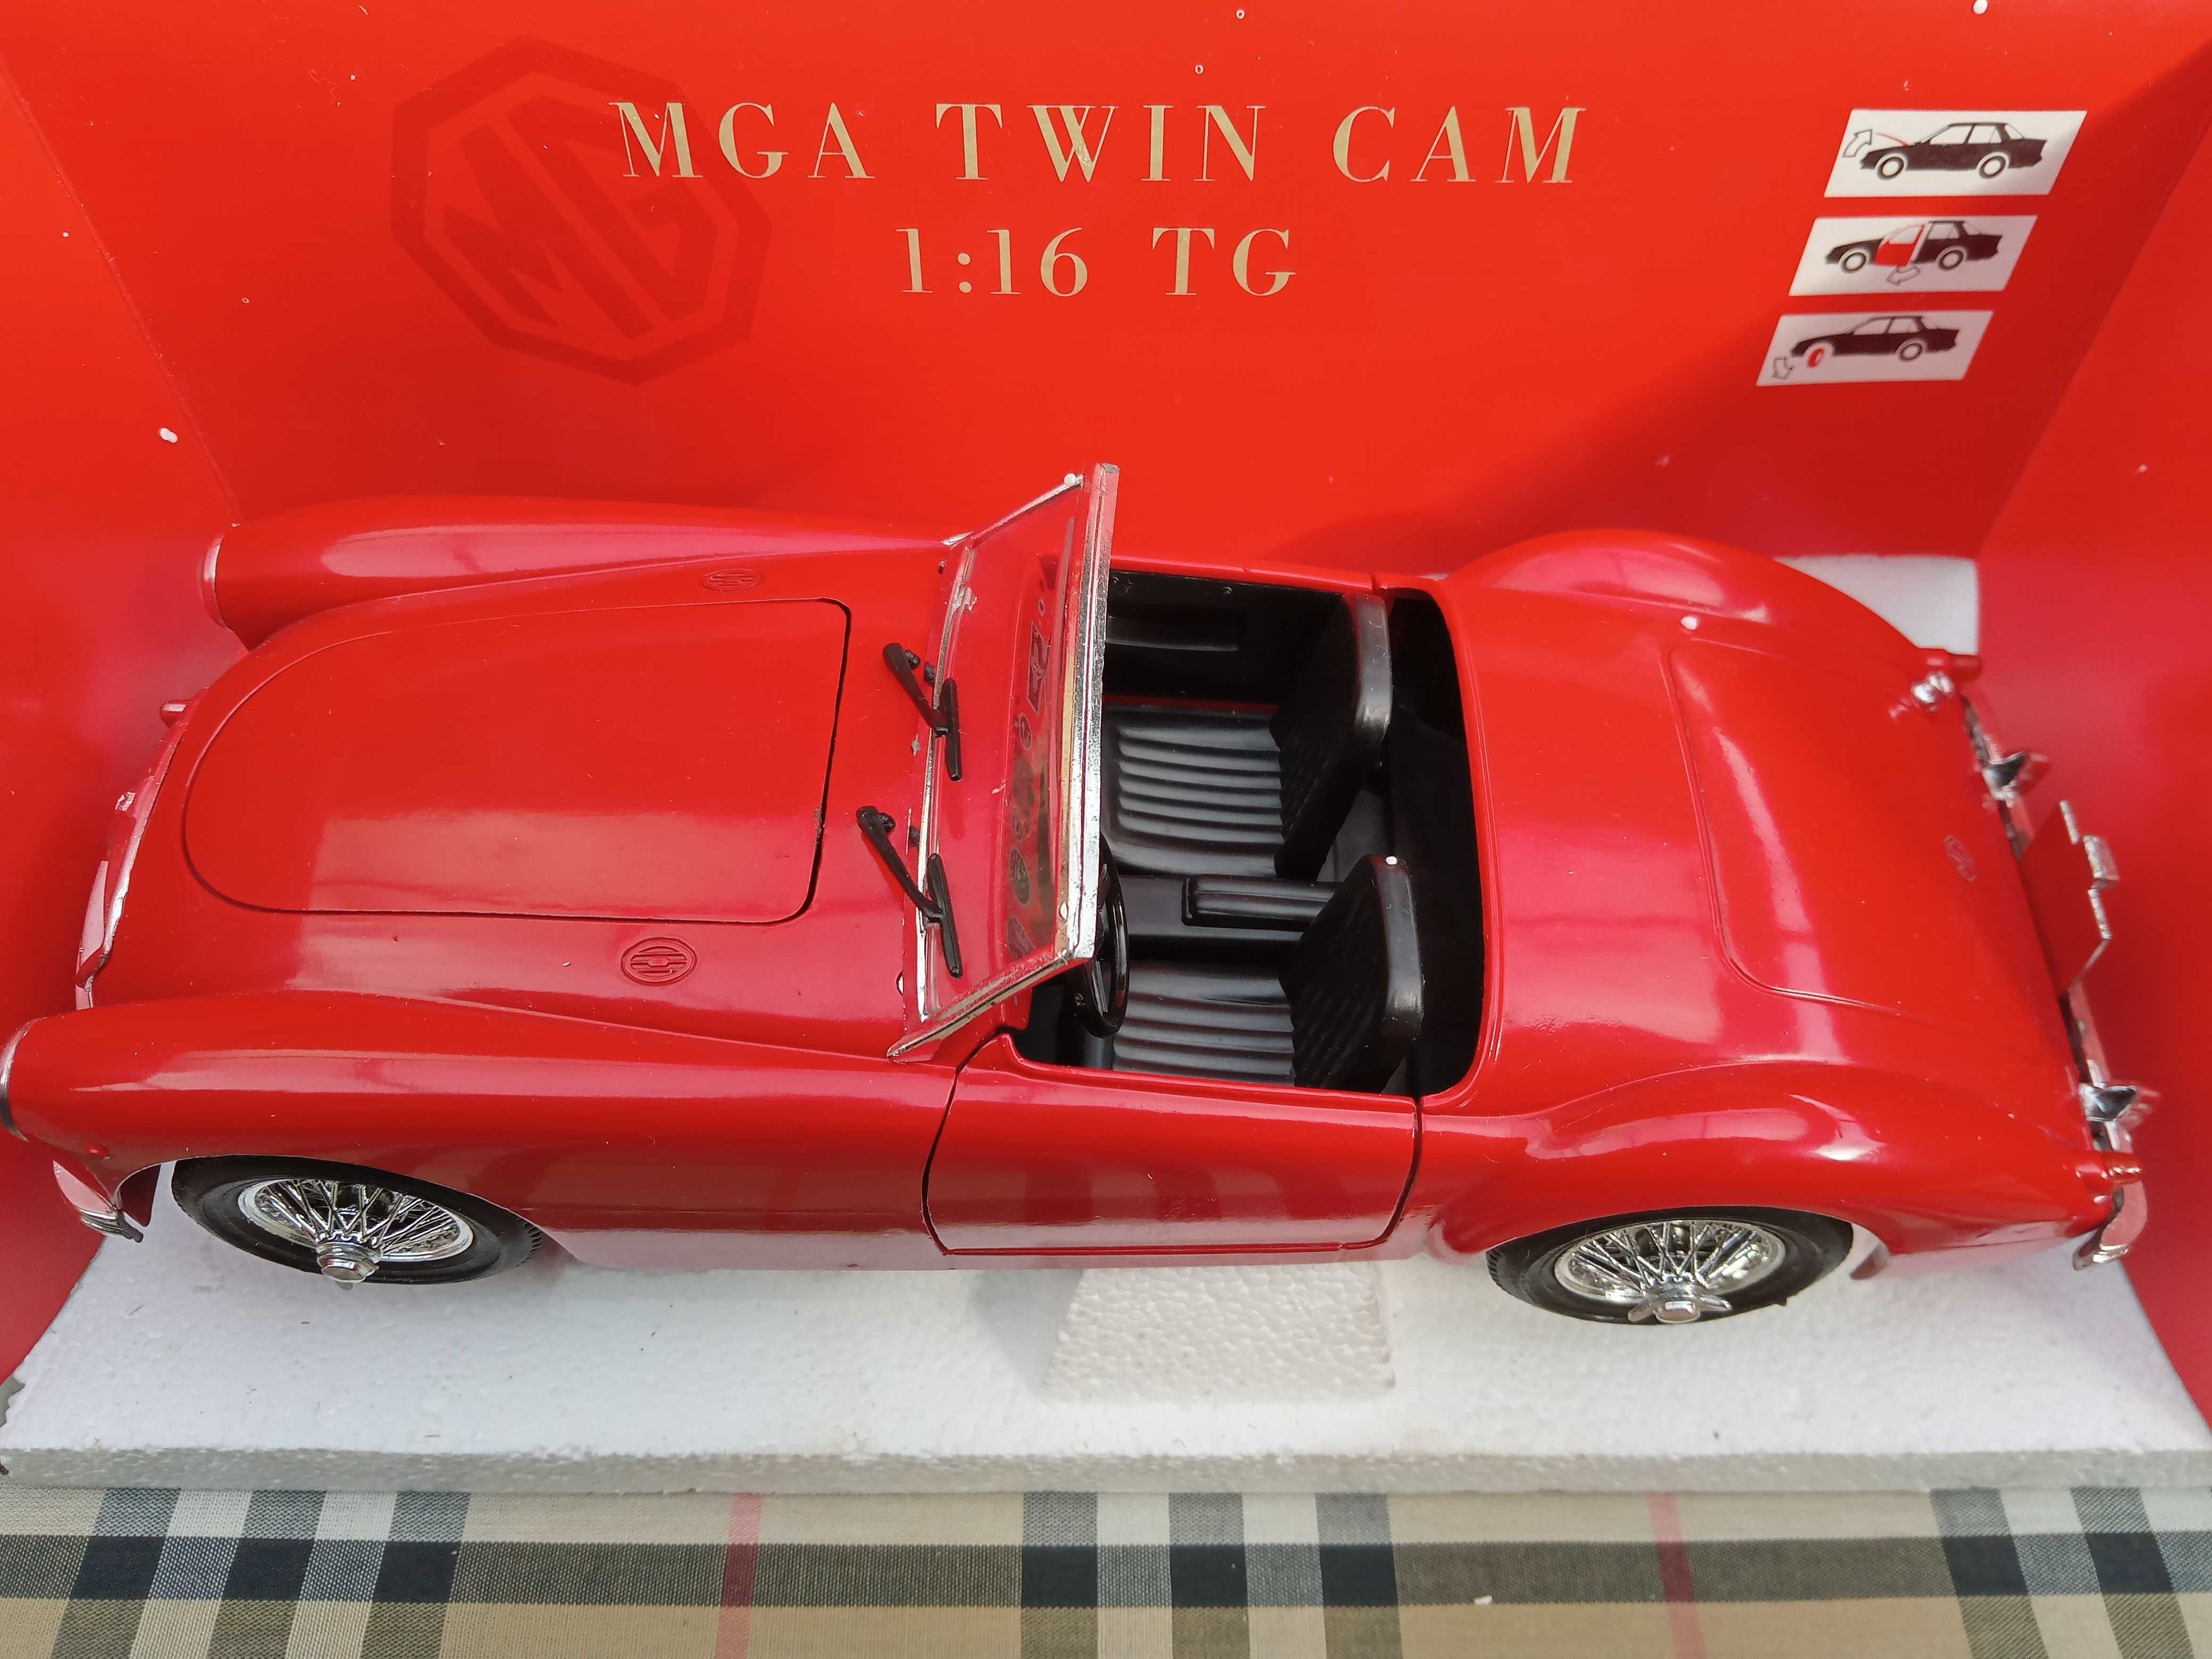 1:16 MGA 1600 Twins Cam - Tonka / Polistil